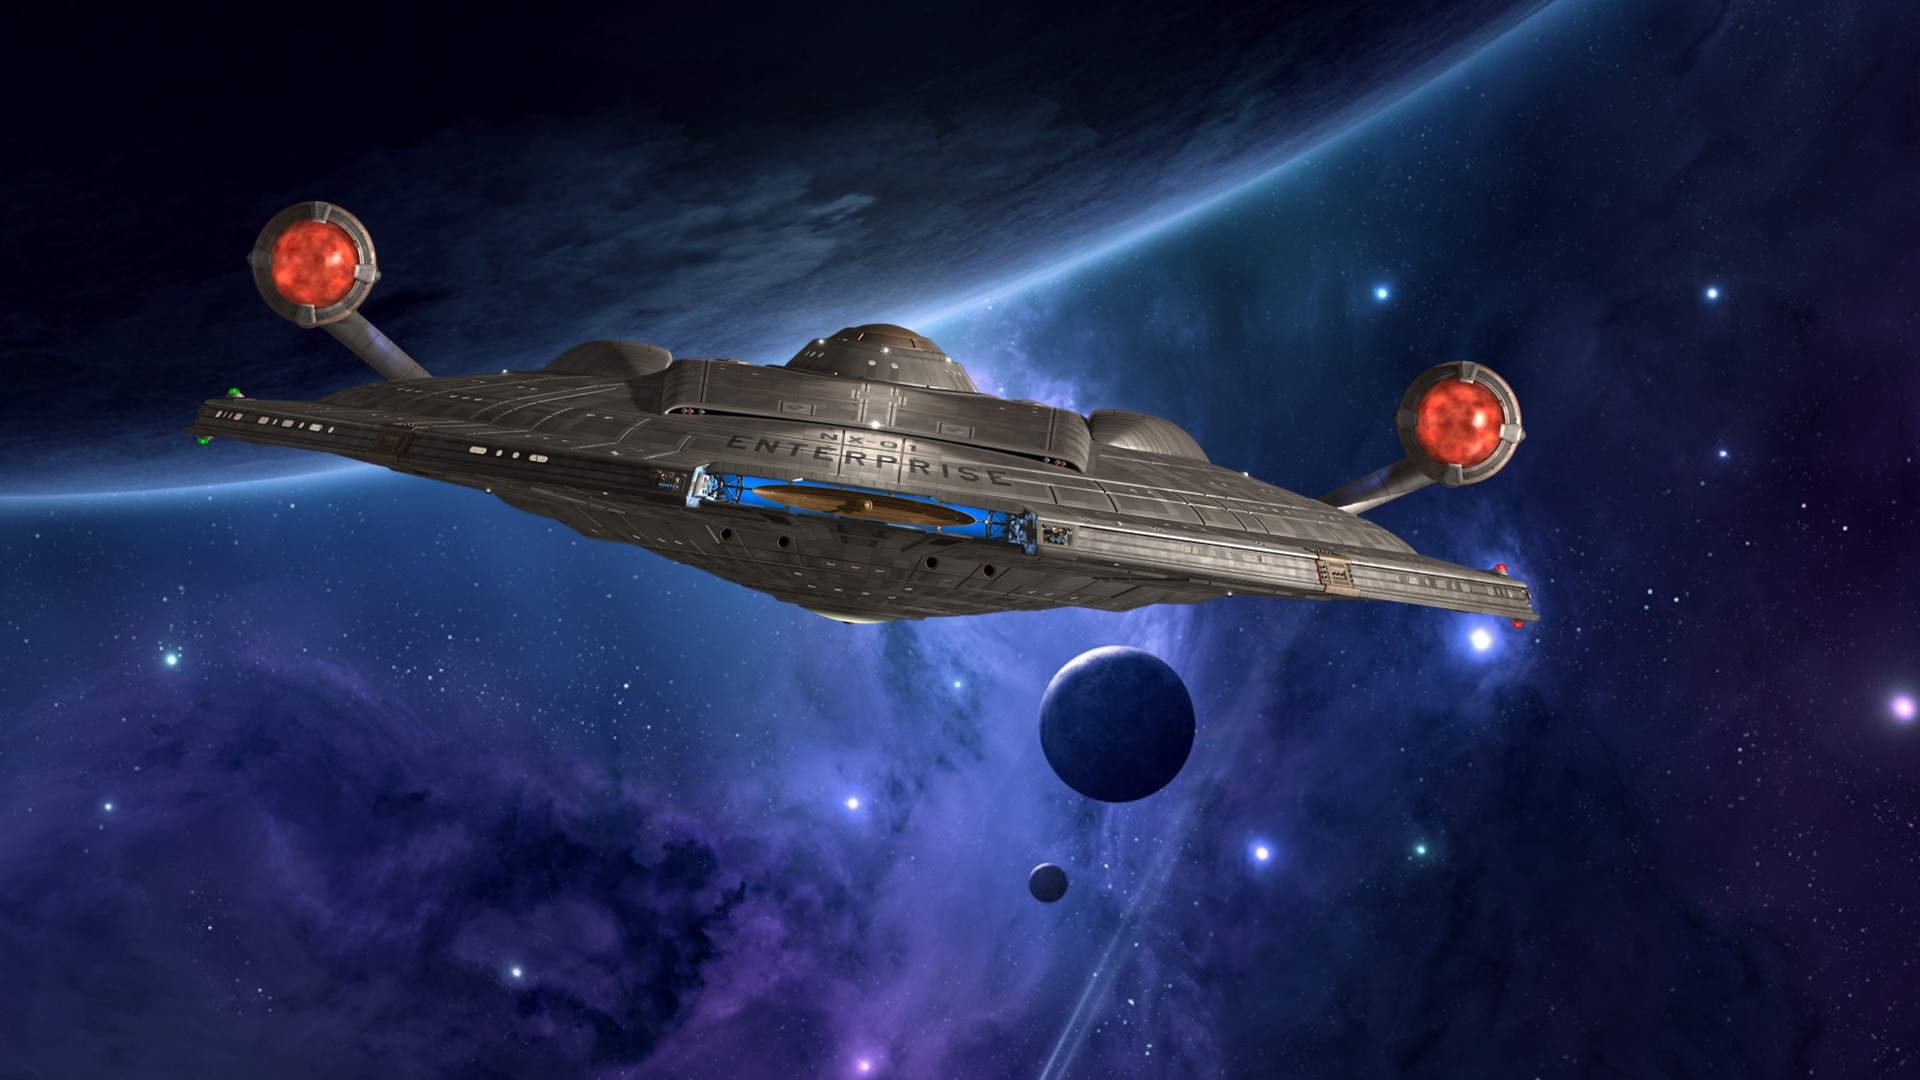 Star Trek Enterprise Wallpaper Pictures Image